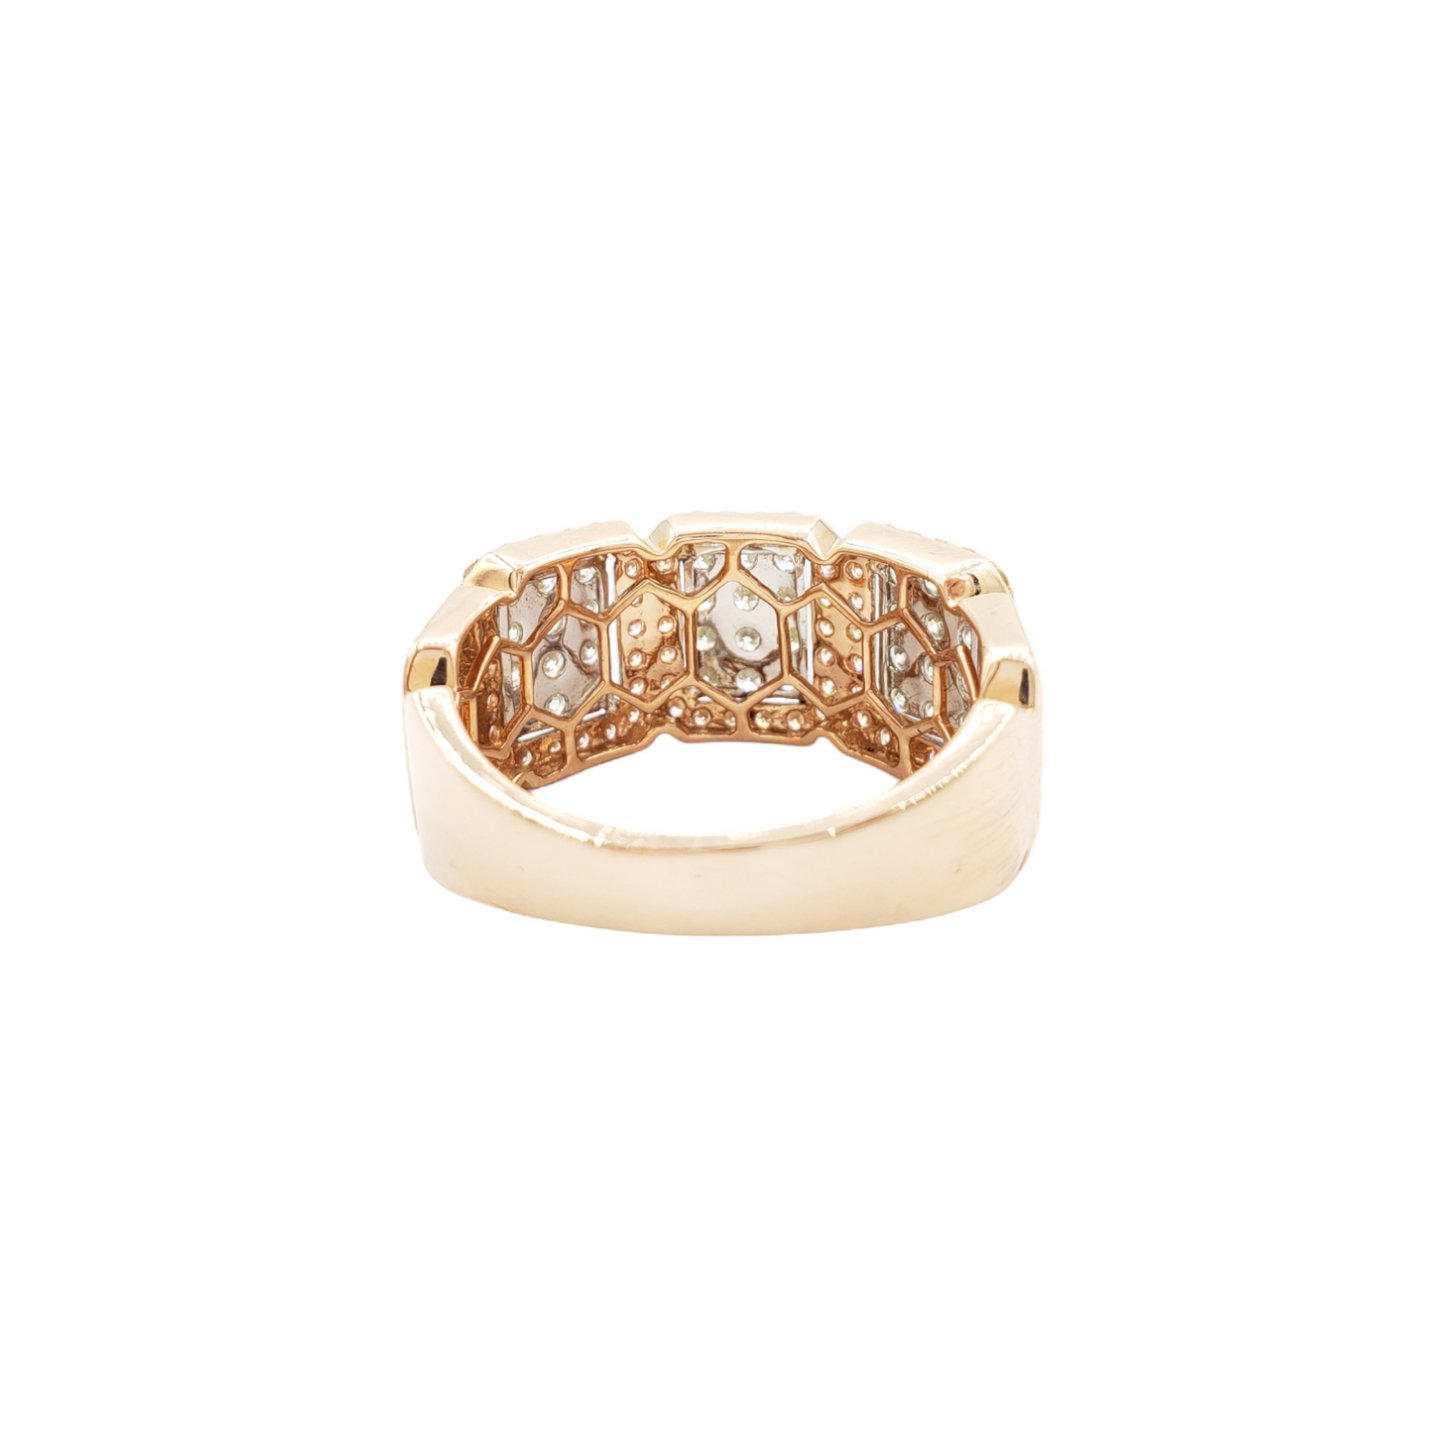 14k Diamond Ring With 2.02 Carats Of Diamonds #12835